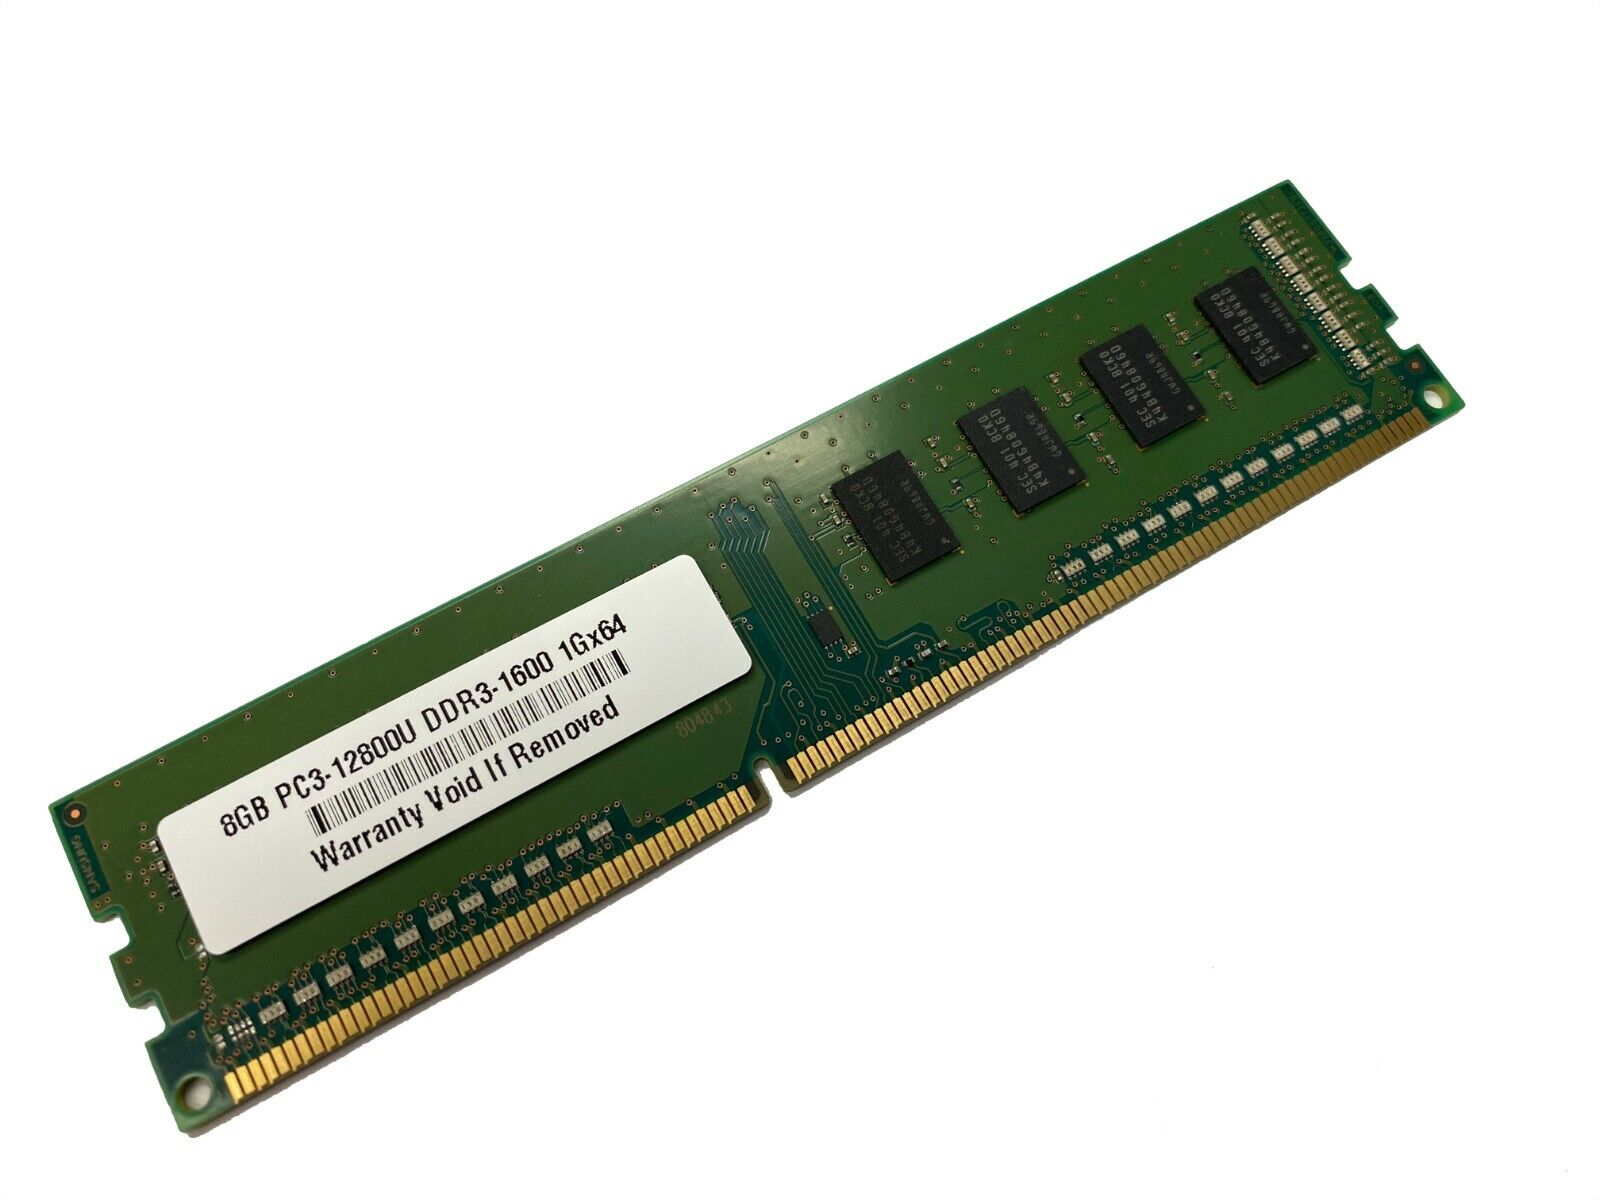 8GB Memory for MSI A88XM-P33, AM1I, CSM-Q87M-E43, H81I DDR3 PC3-12800U RAM